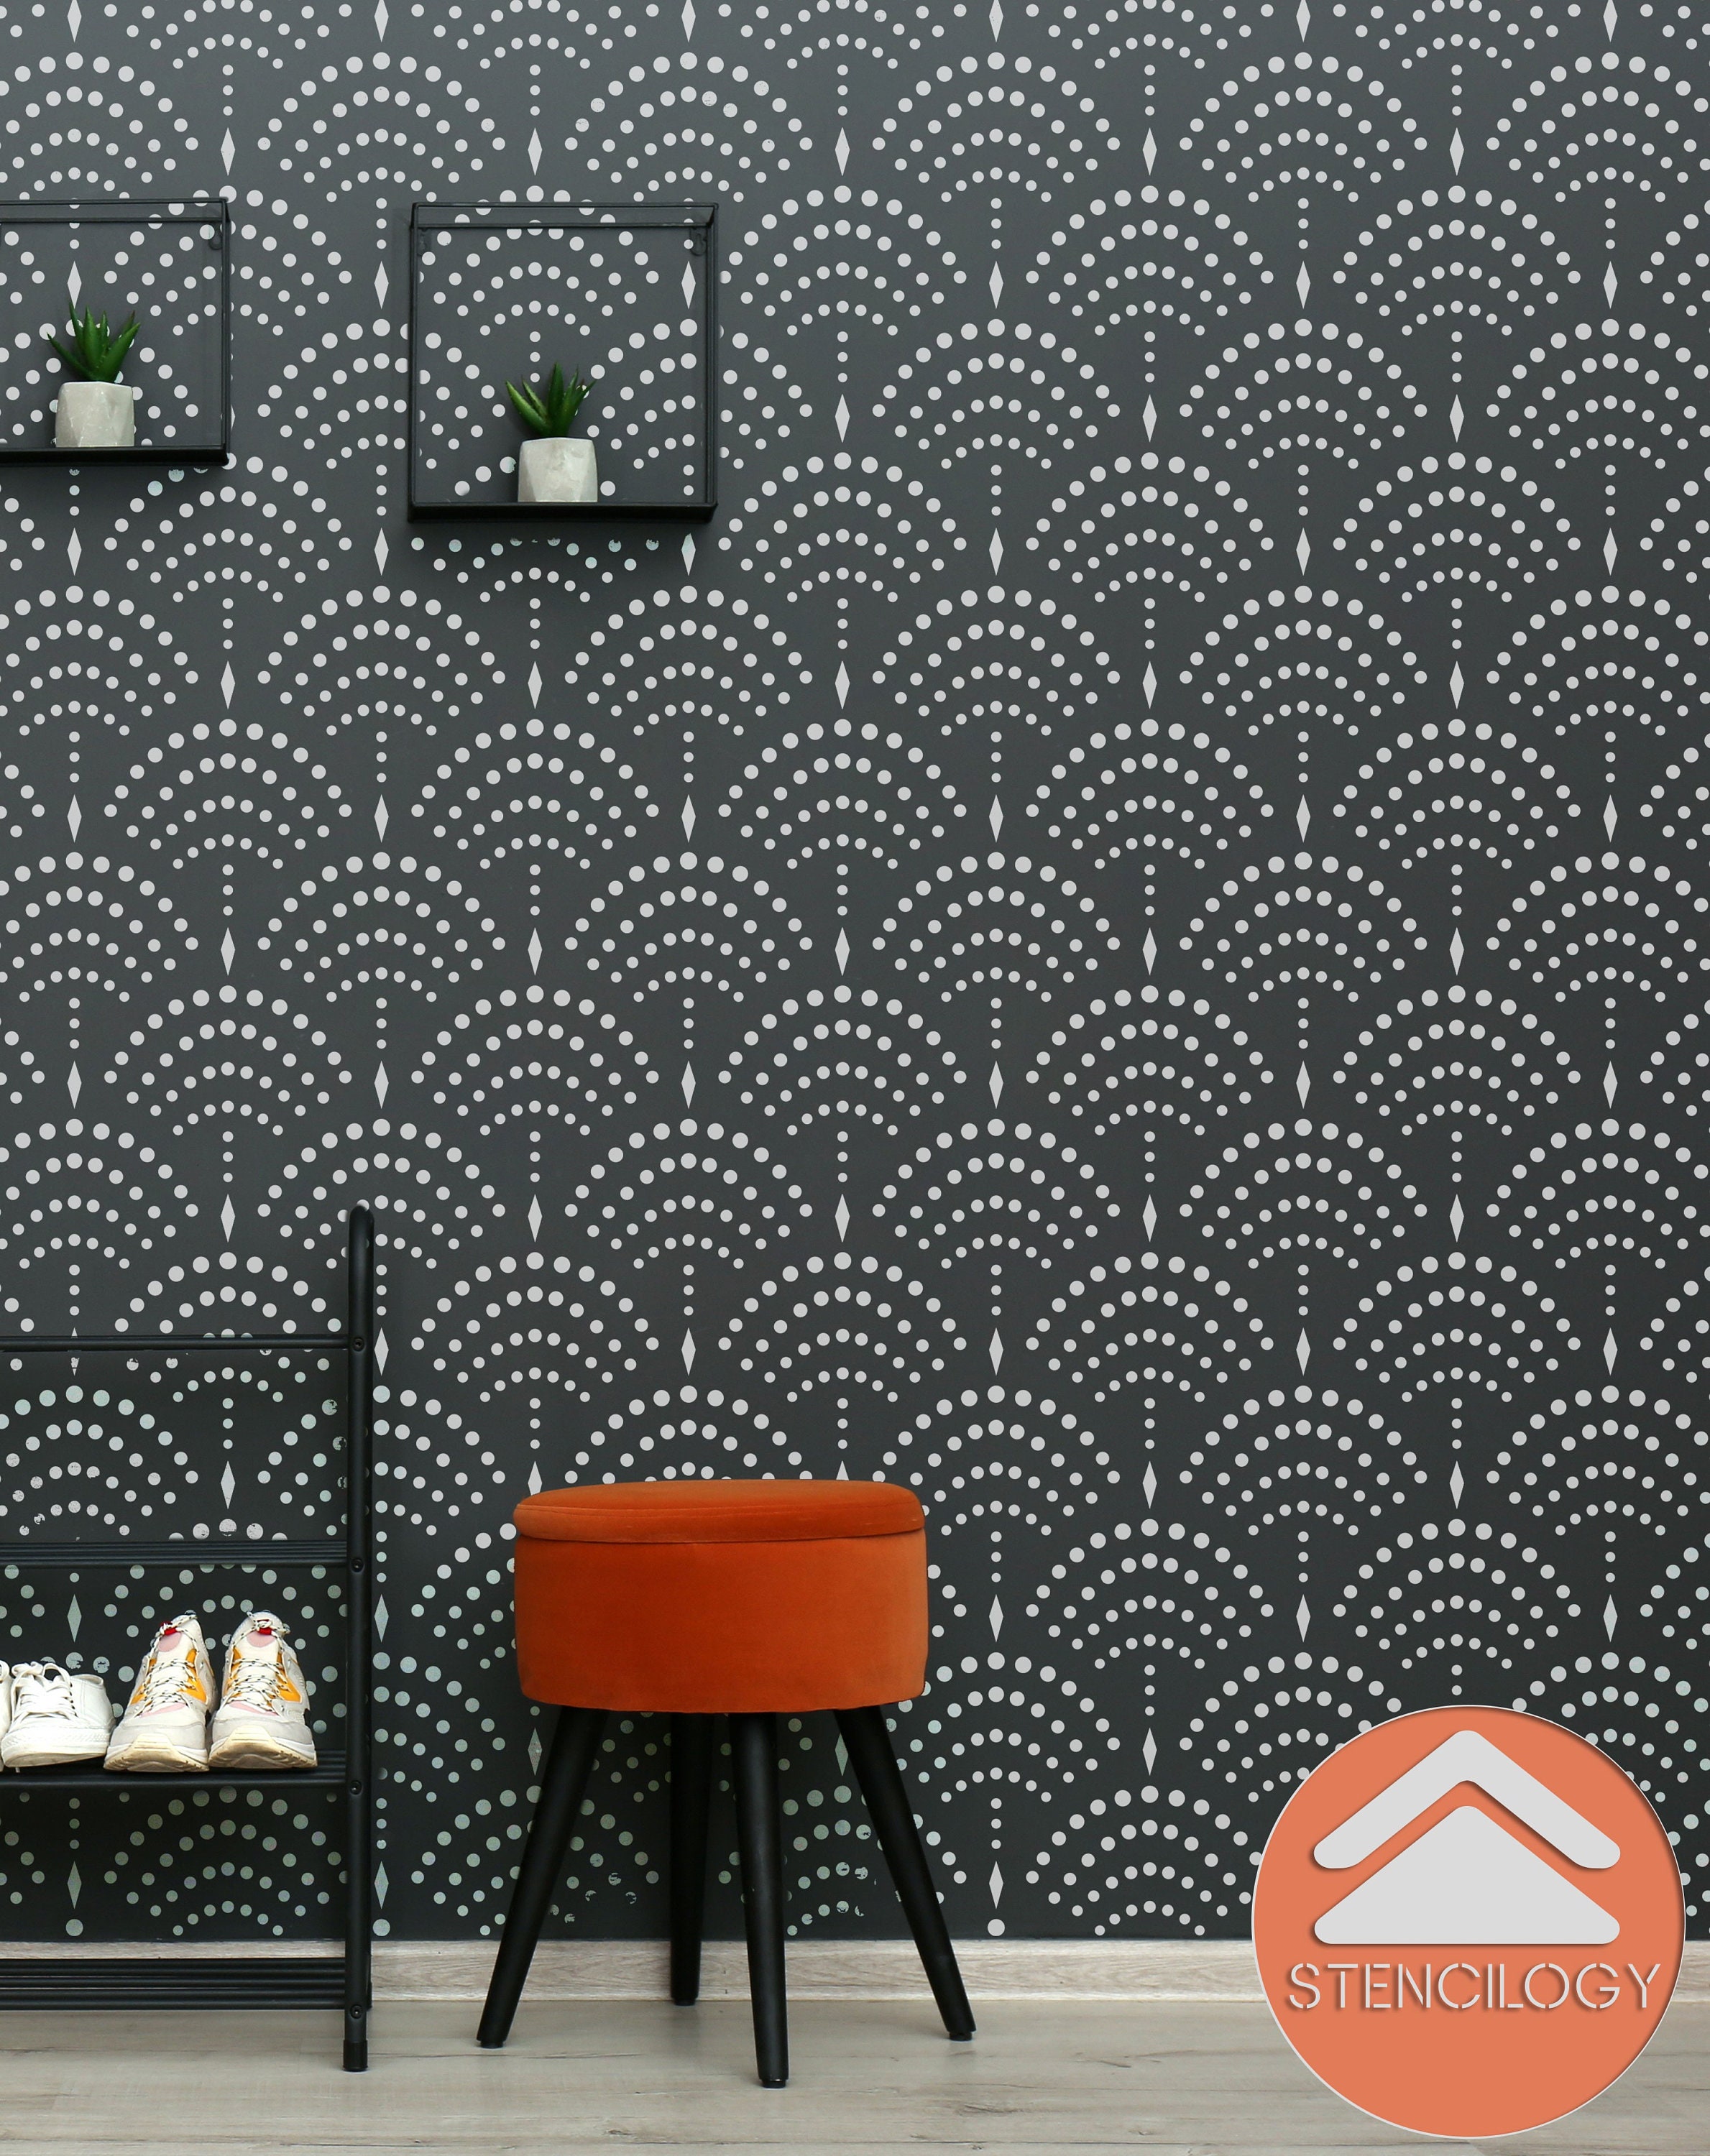 Sakae Japanese Tile Stencil Geometric Pattern Stencils for Painting Walls  Floor